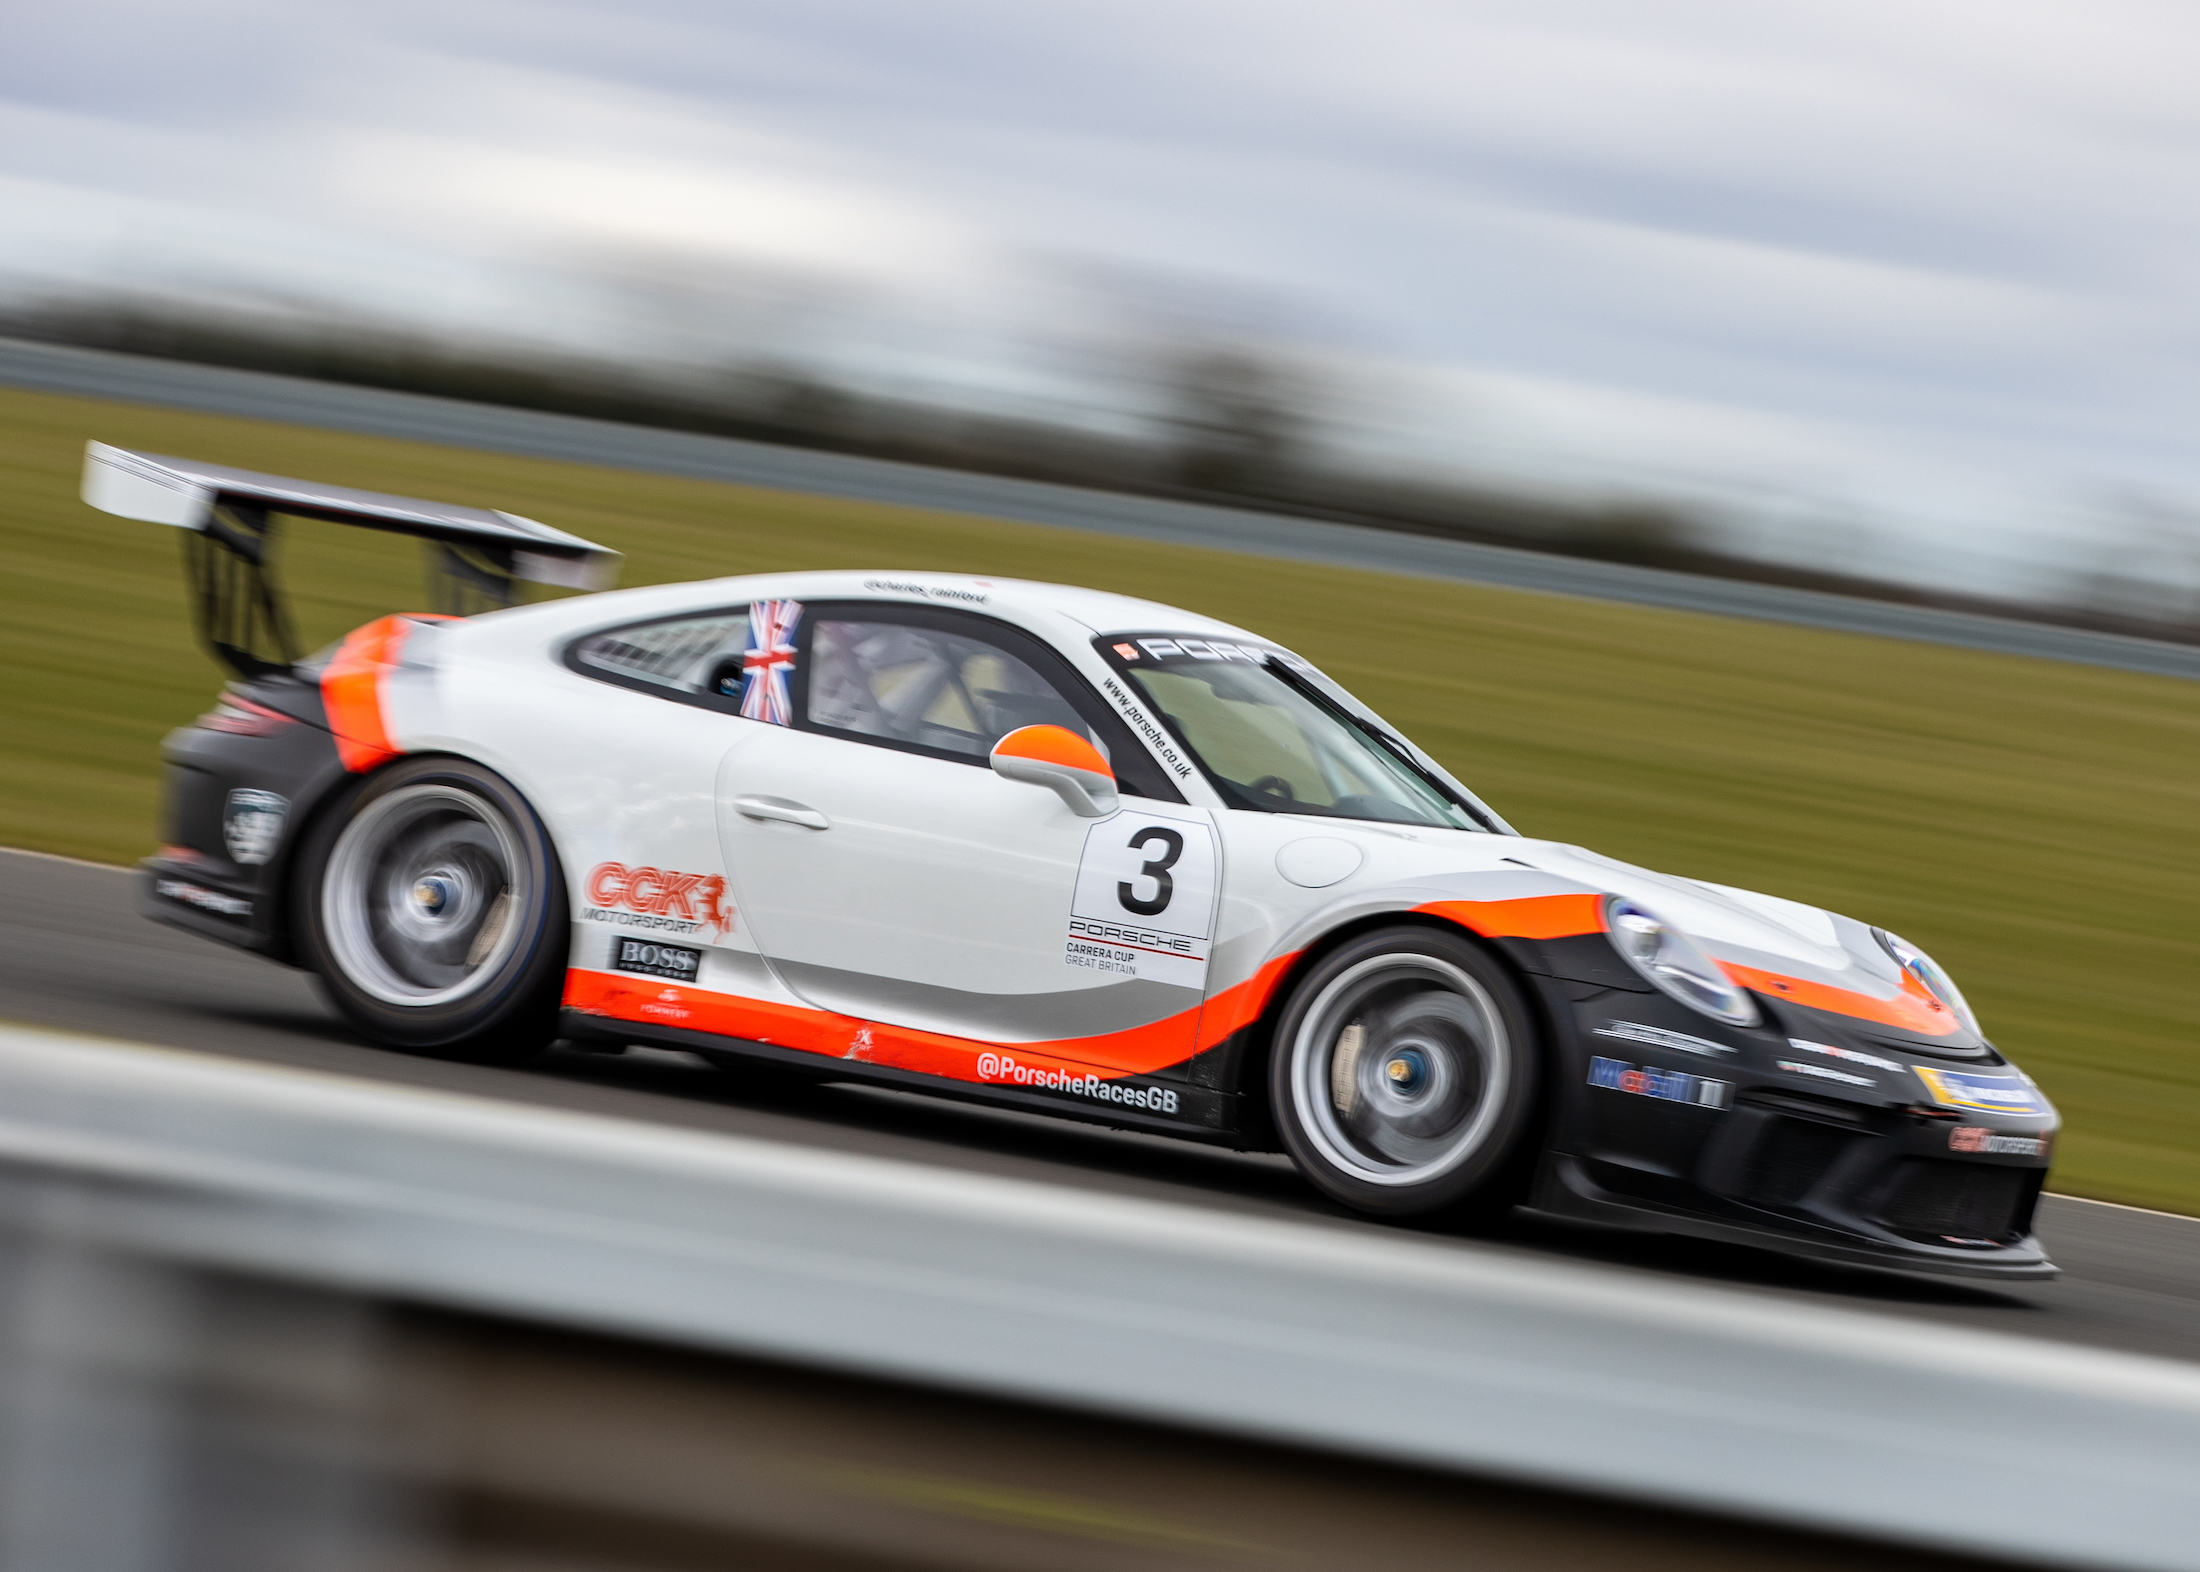 Charles Rainford – First Test of the Porsche 911 GT3 Cup Car